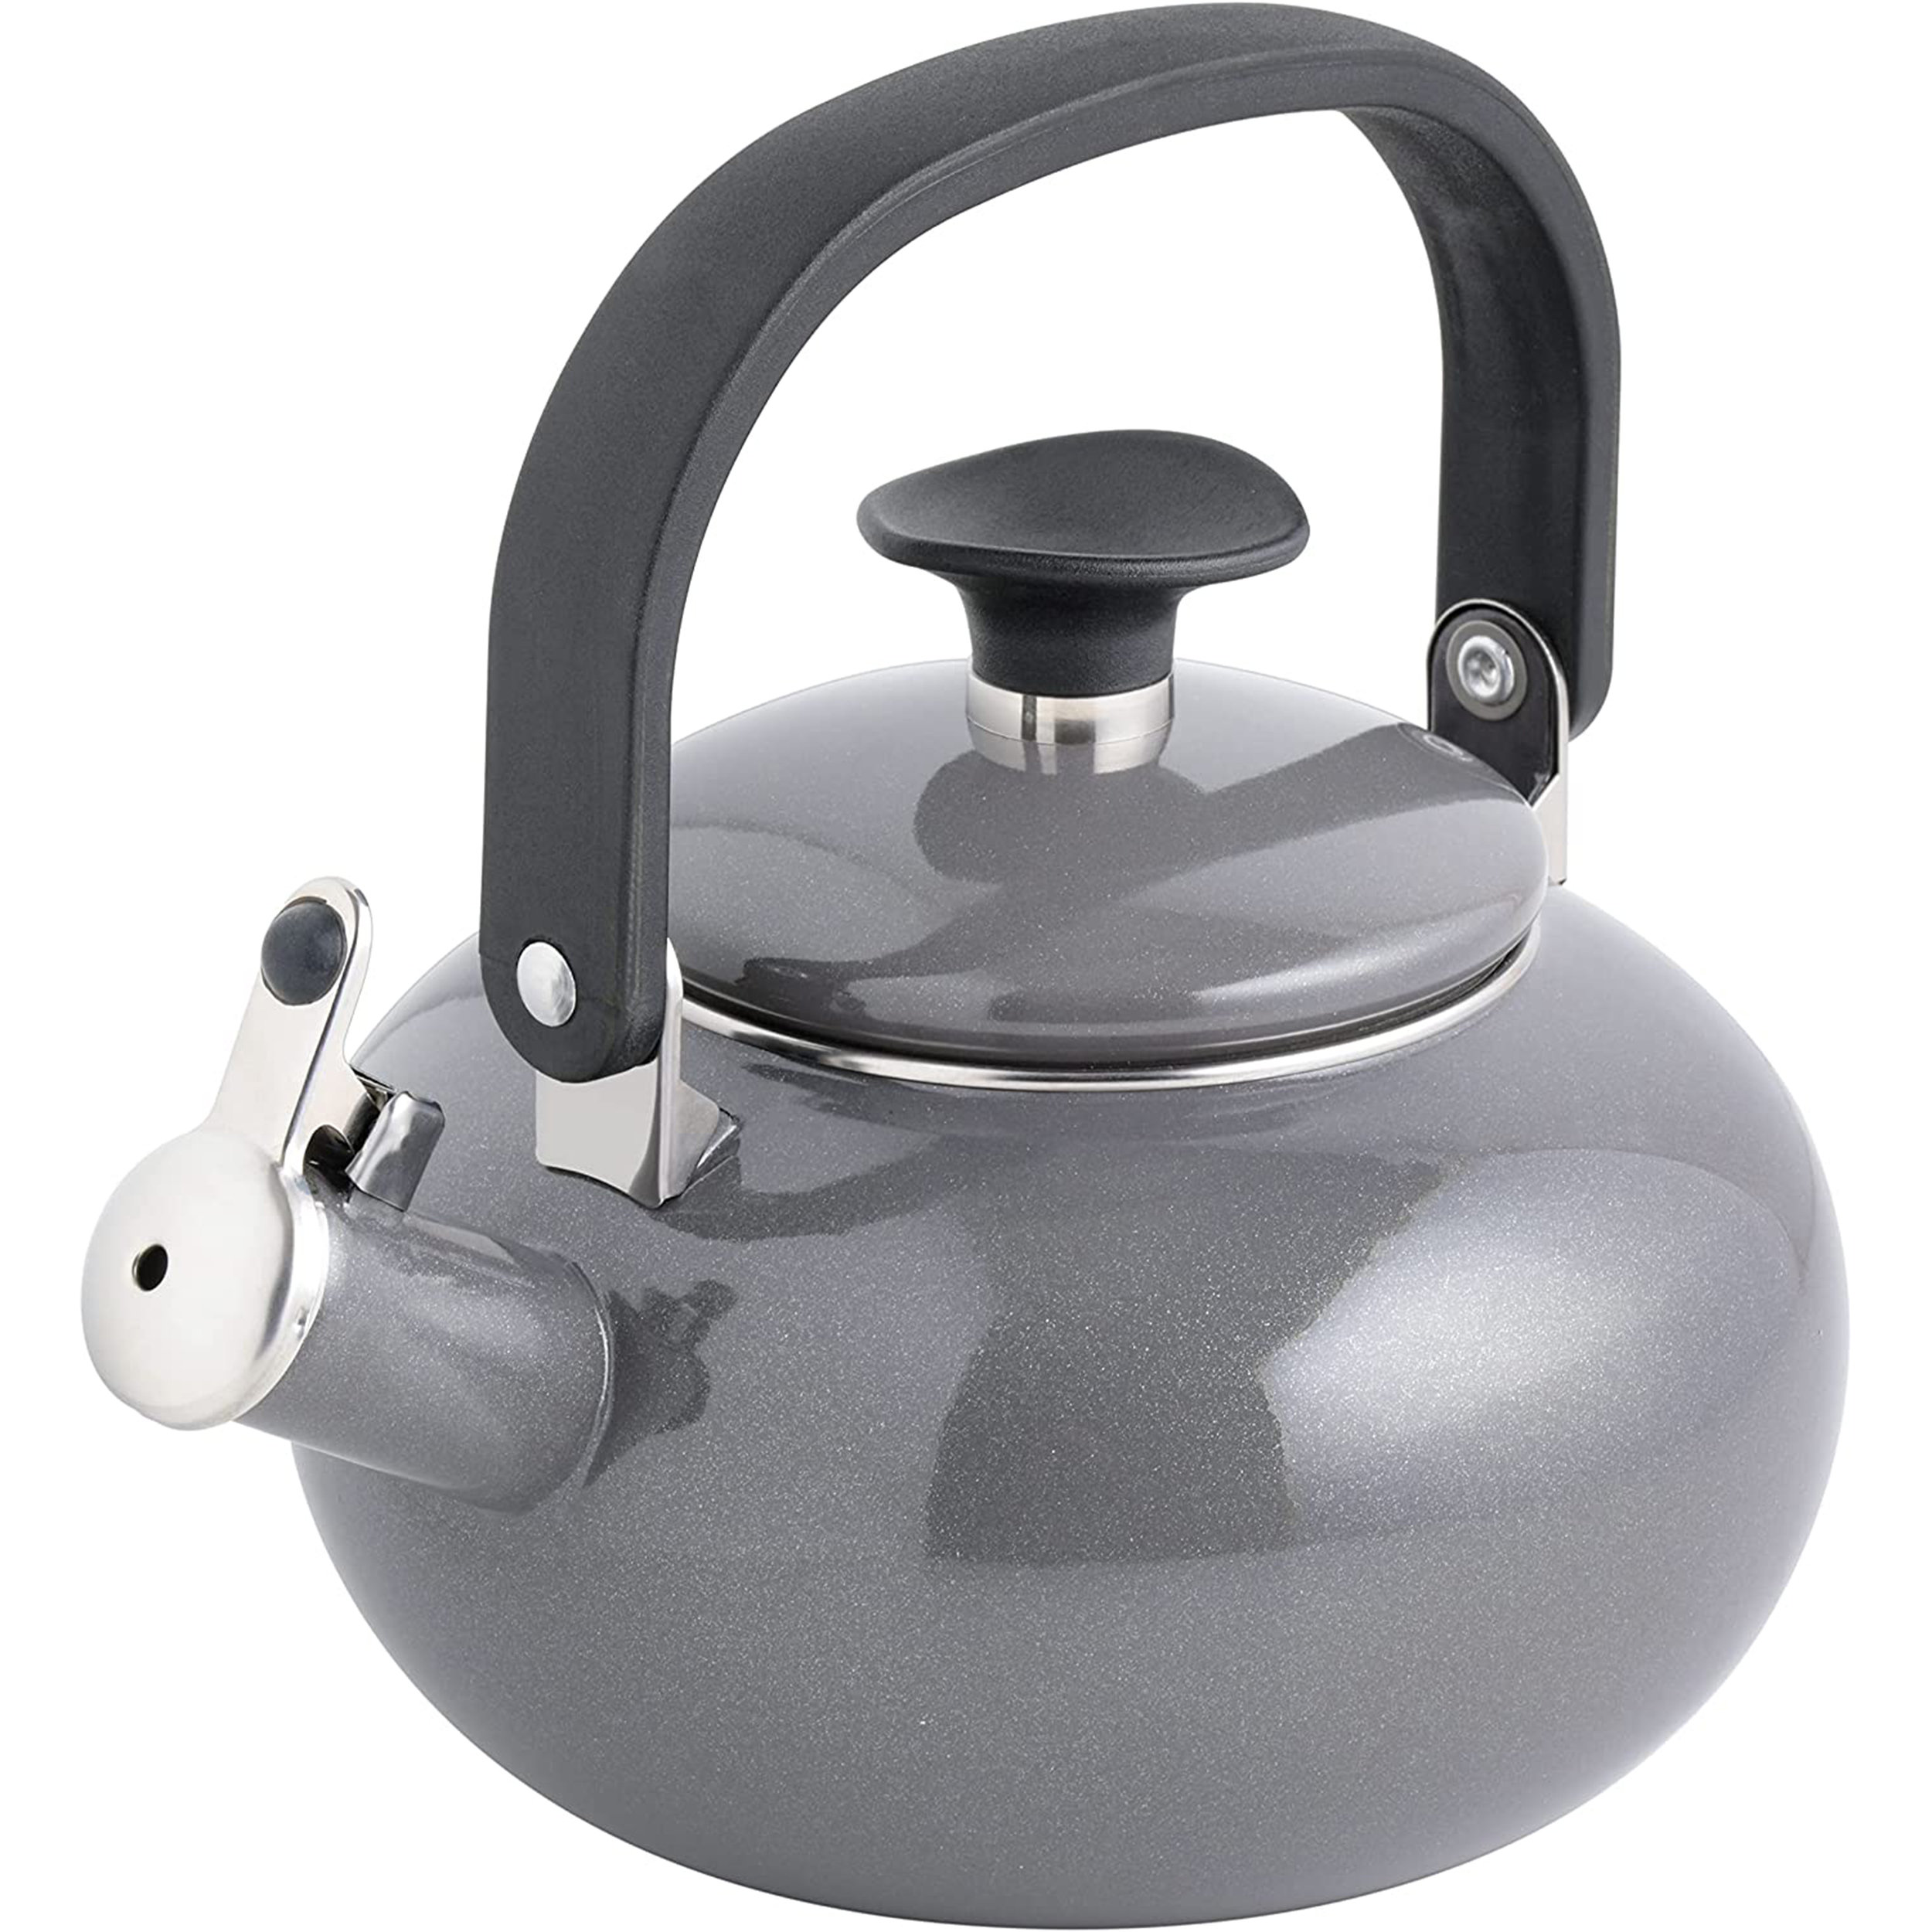 Tea Kettle Stainless Steel Whistling Teakettle Tea Pots for Stove Top with Ergonomic Folding